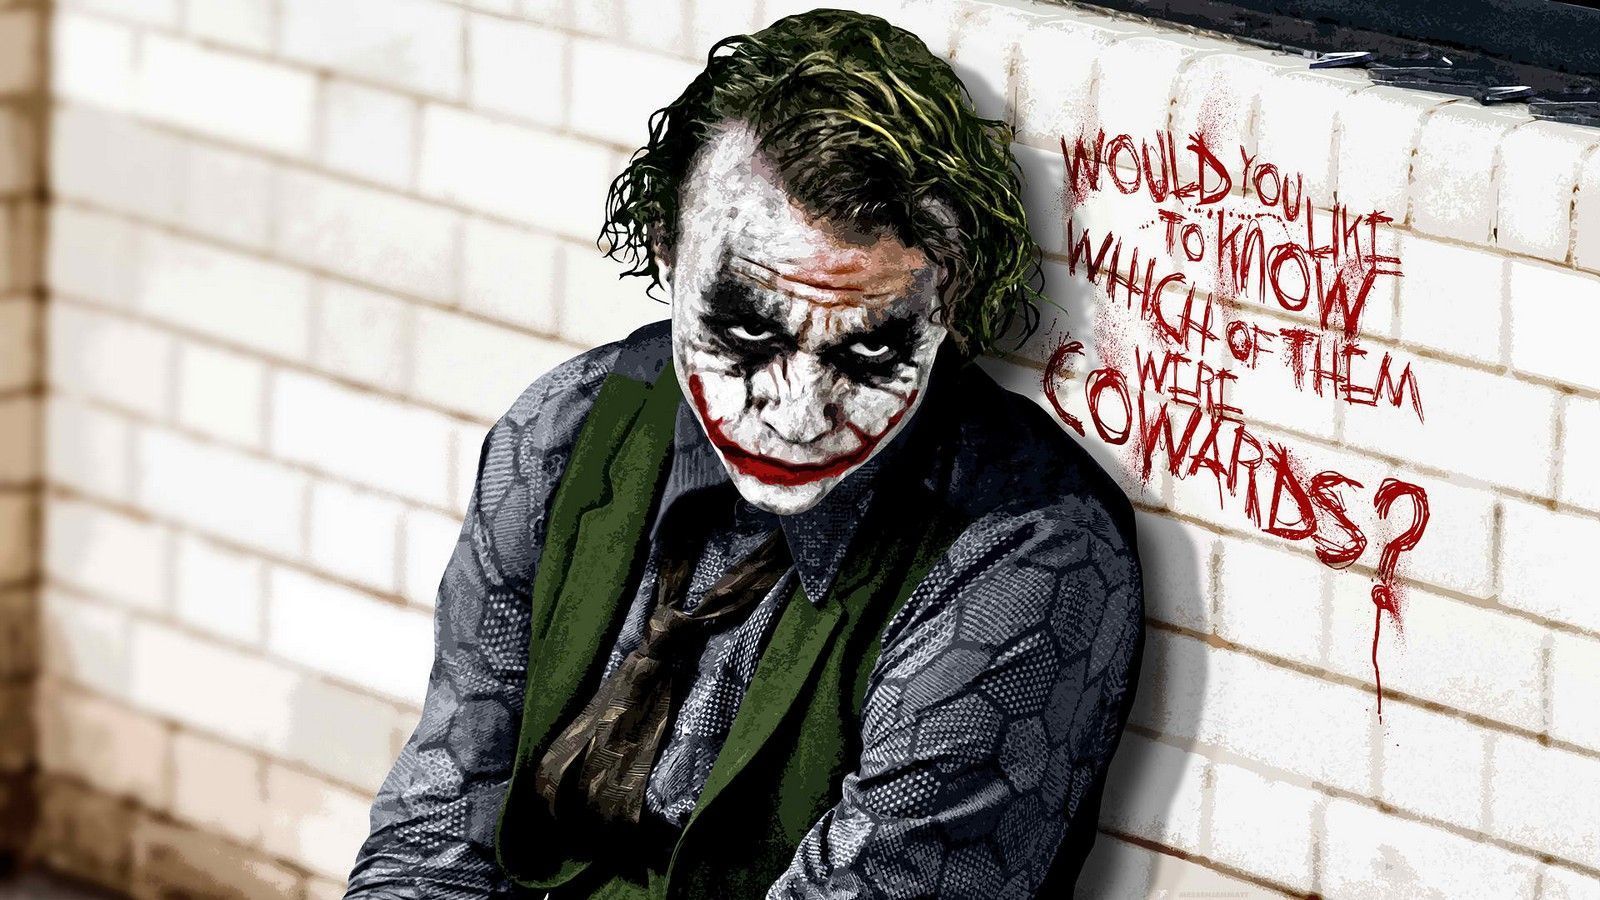 Why so Serious Joker Wallpaper Free Why so Serious Joker